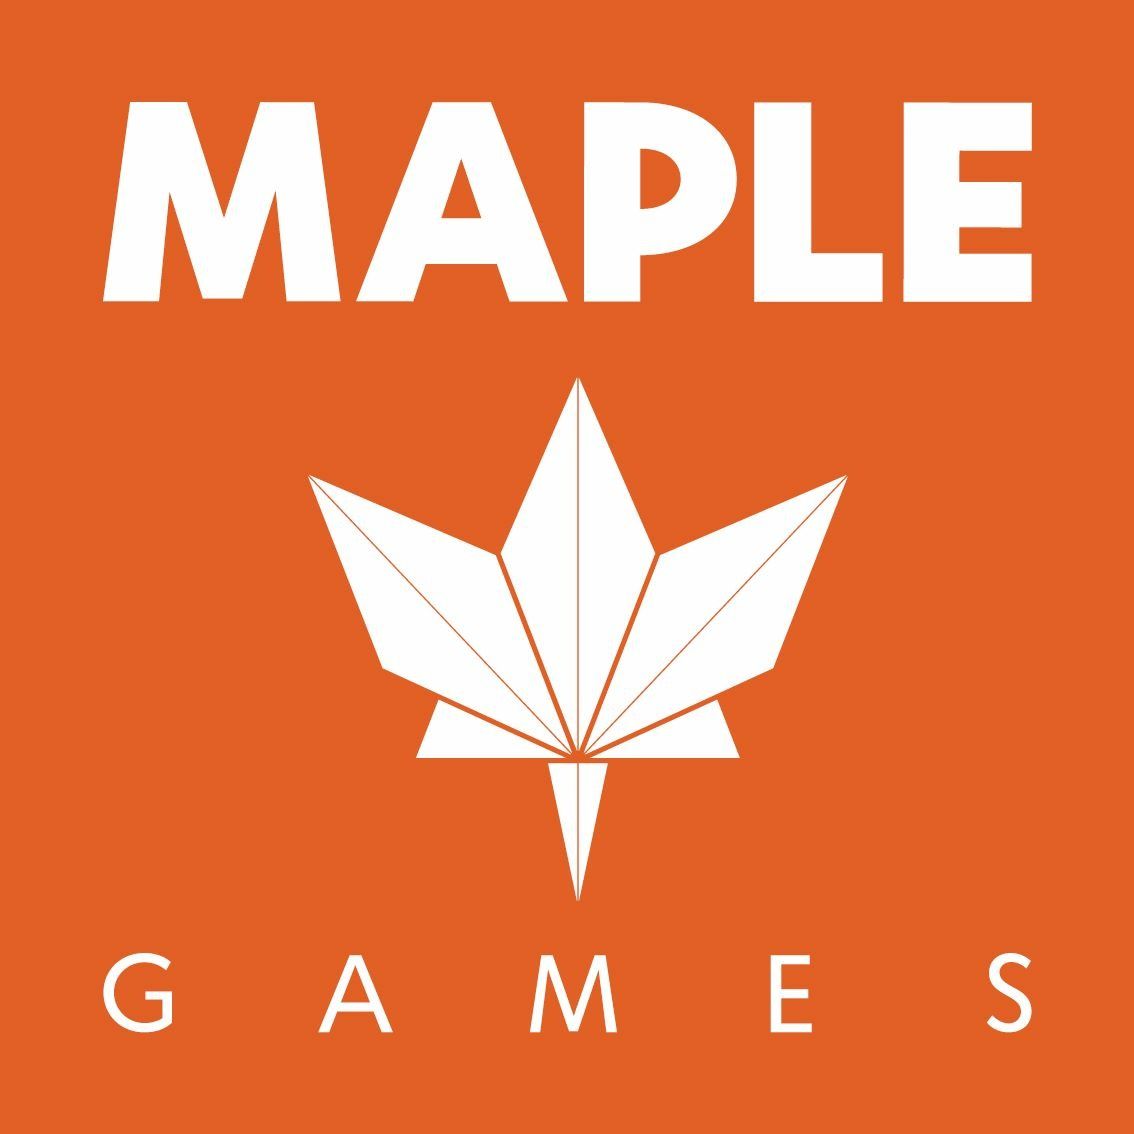 Brand: Maple Games